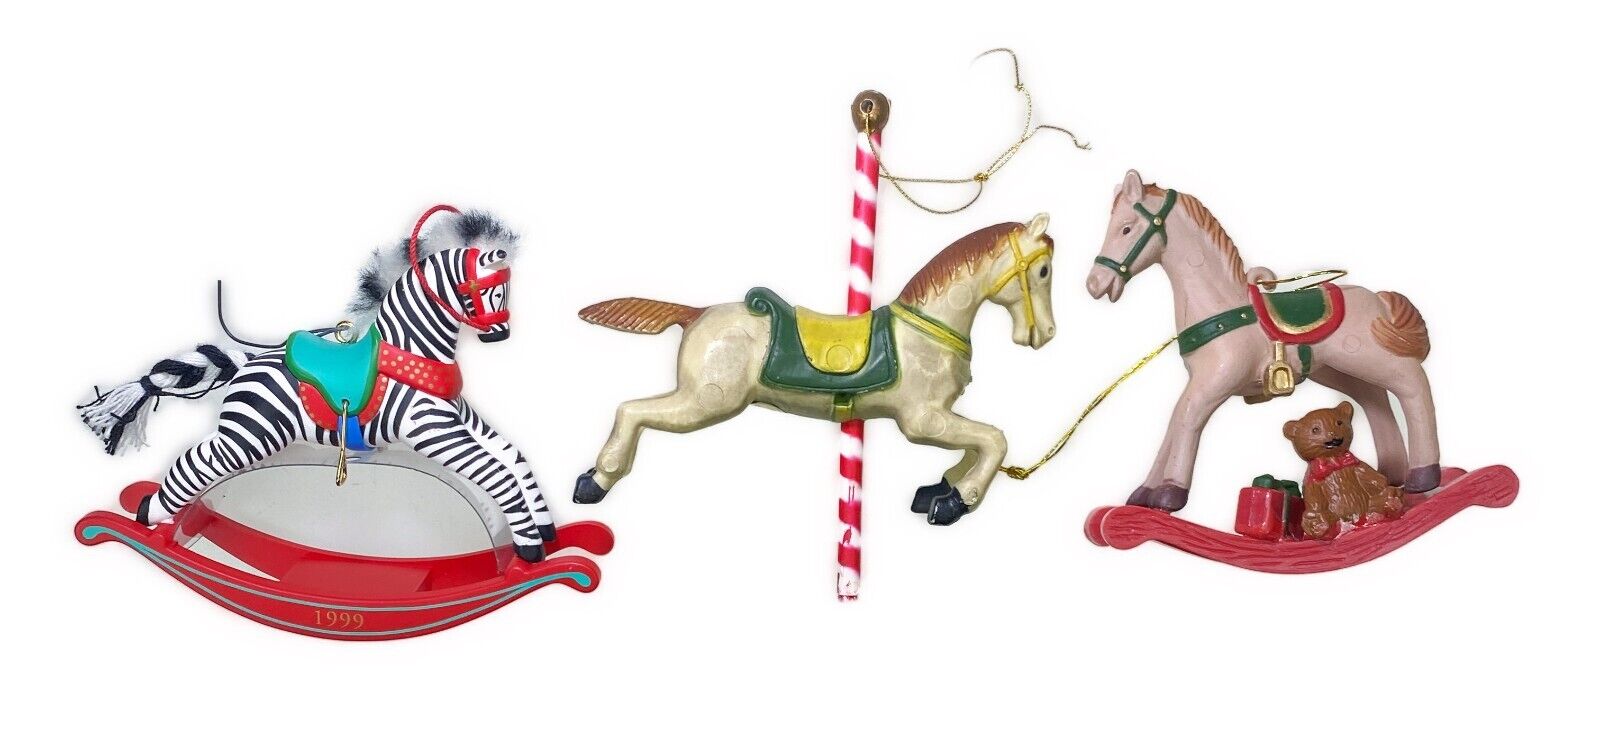 1999 Rocking Zebra & Carousel Horse Pony Plastic 3 Christmas Holiday Ornaments